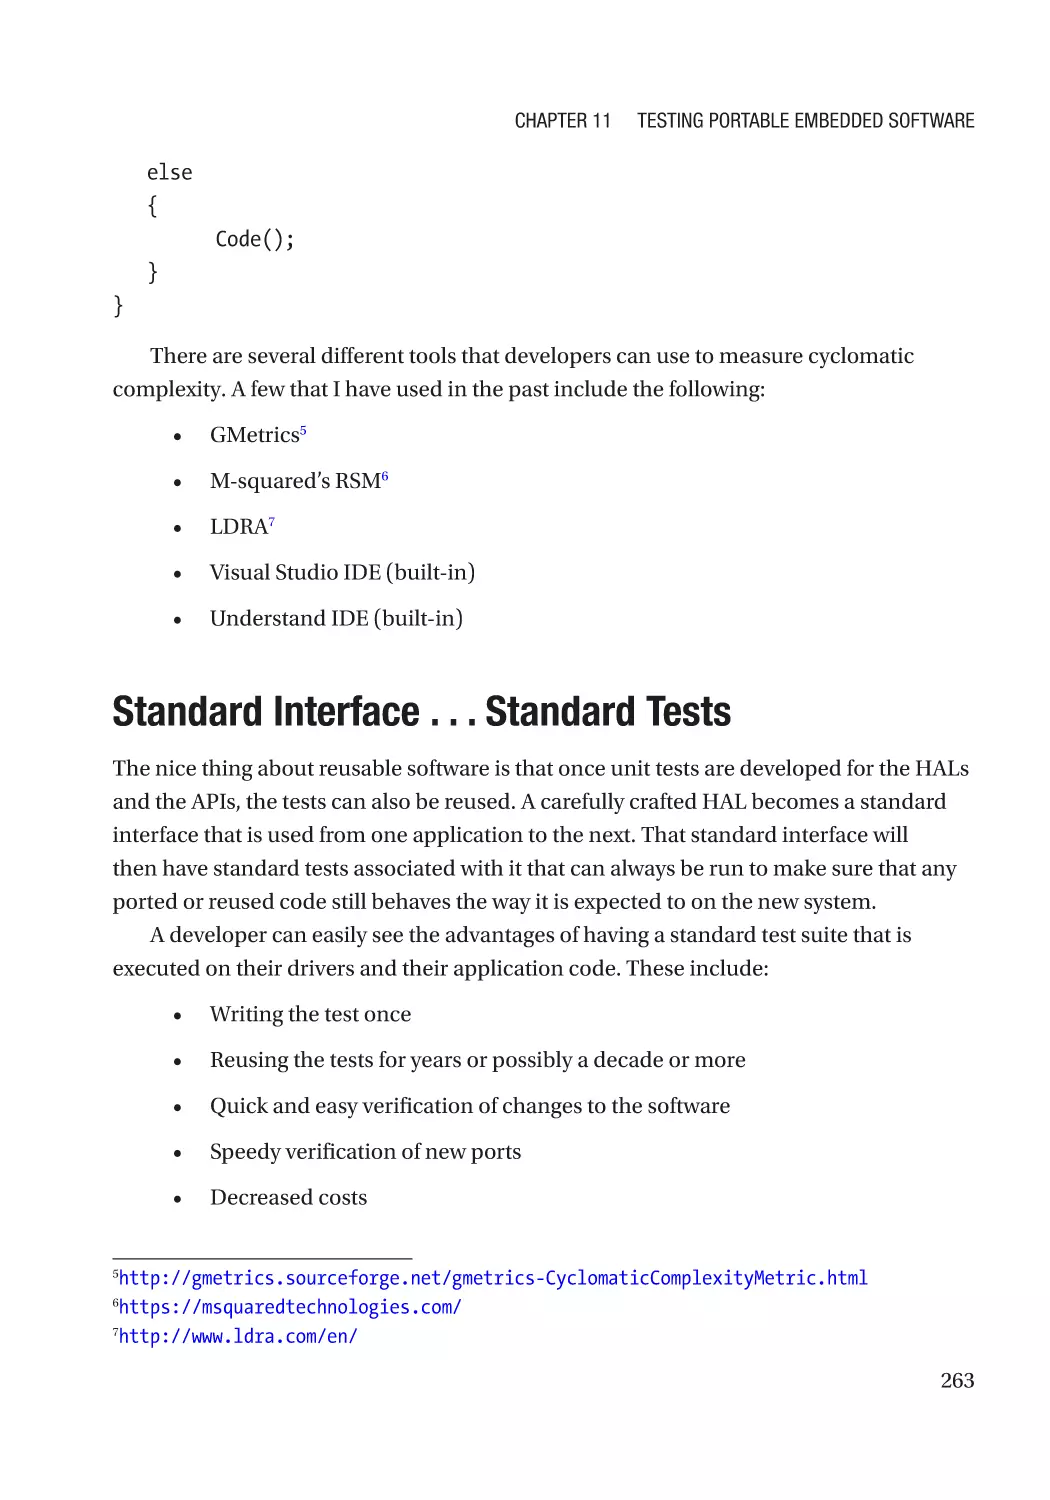 Standard Interface . . . Standard Tests